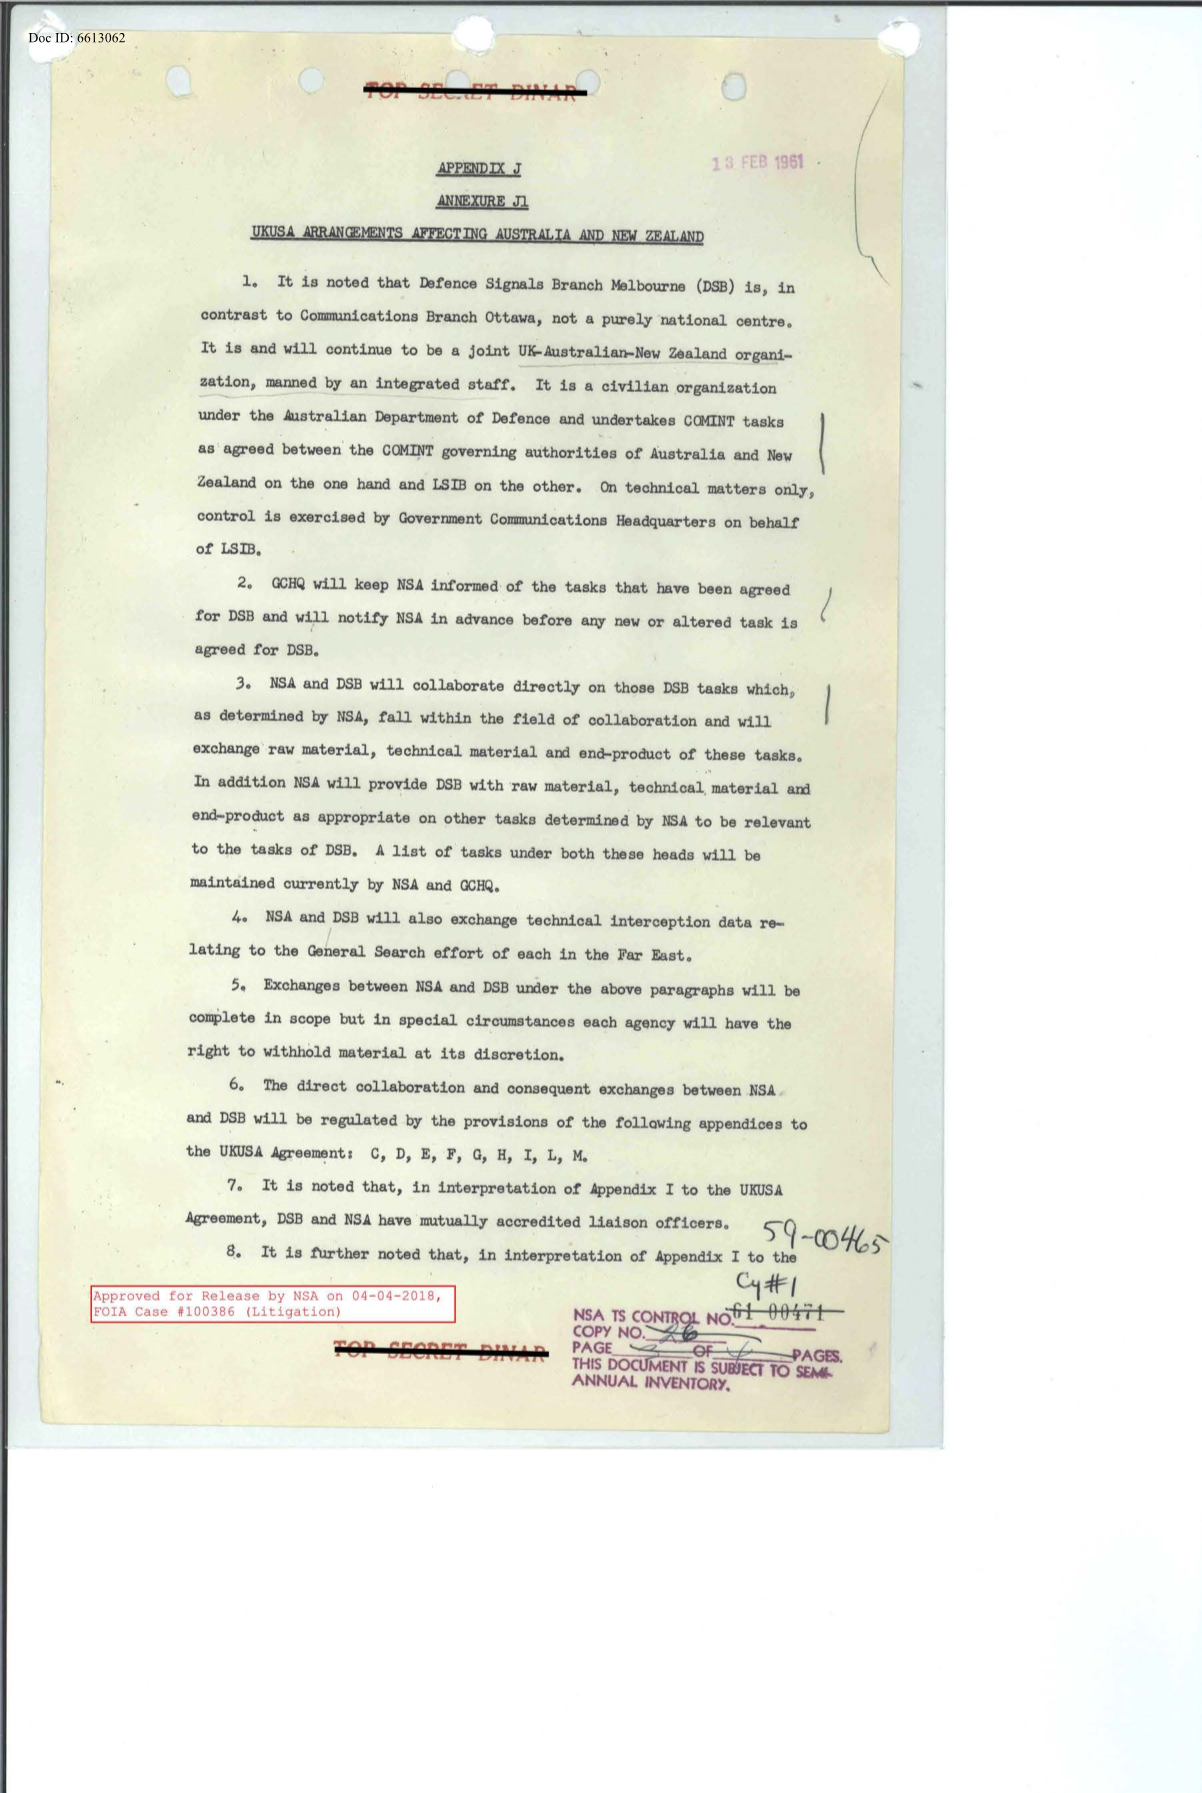  UKUSA_ARRANGEMENTS_AFFEECTING_AUSTRALIA_AND_NEW_ZEALAND_APPENDIX_J_ANNEXURE_J1_13_FEBRUARY_1961.PDF